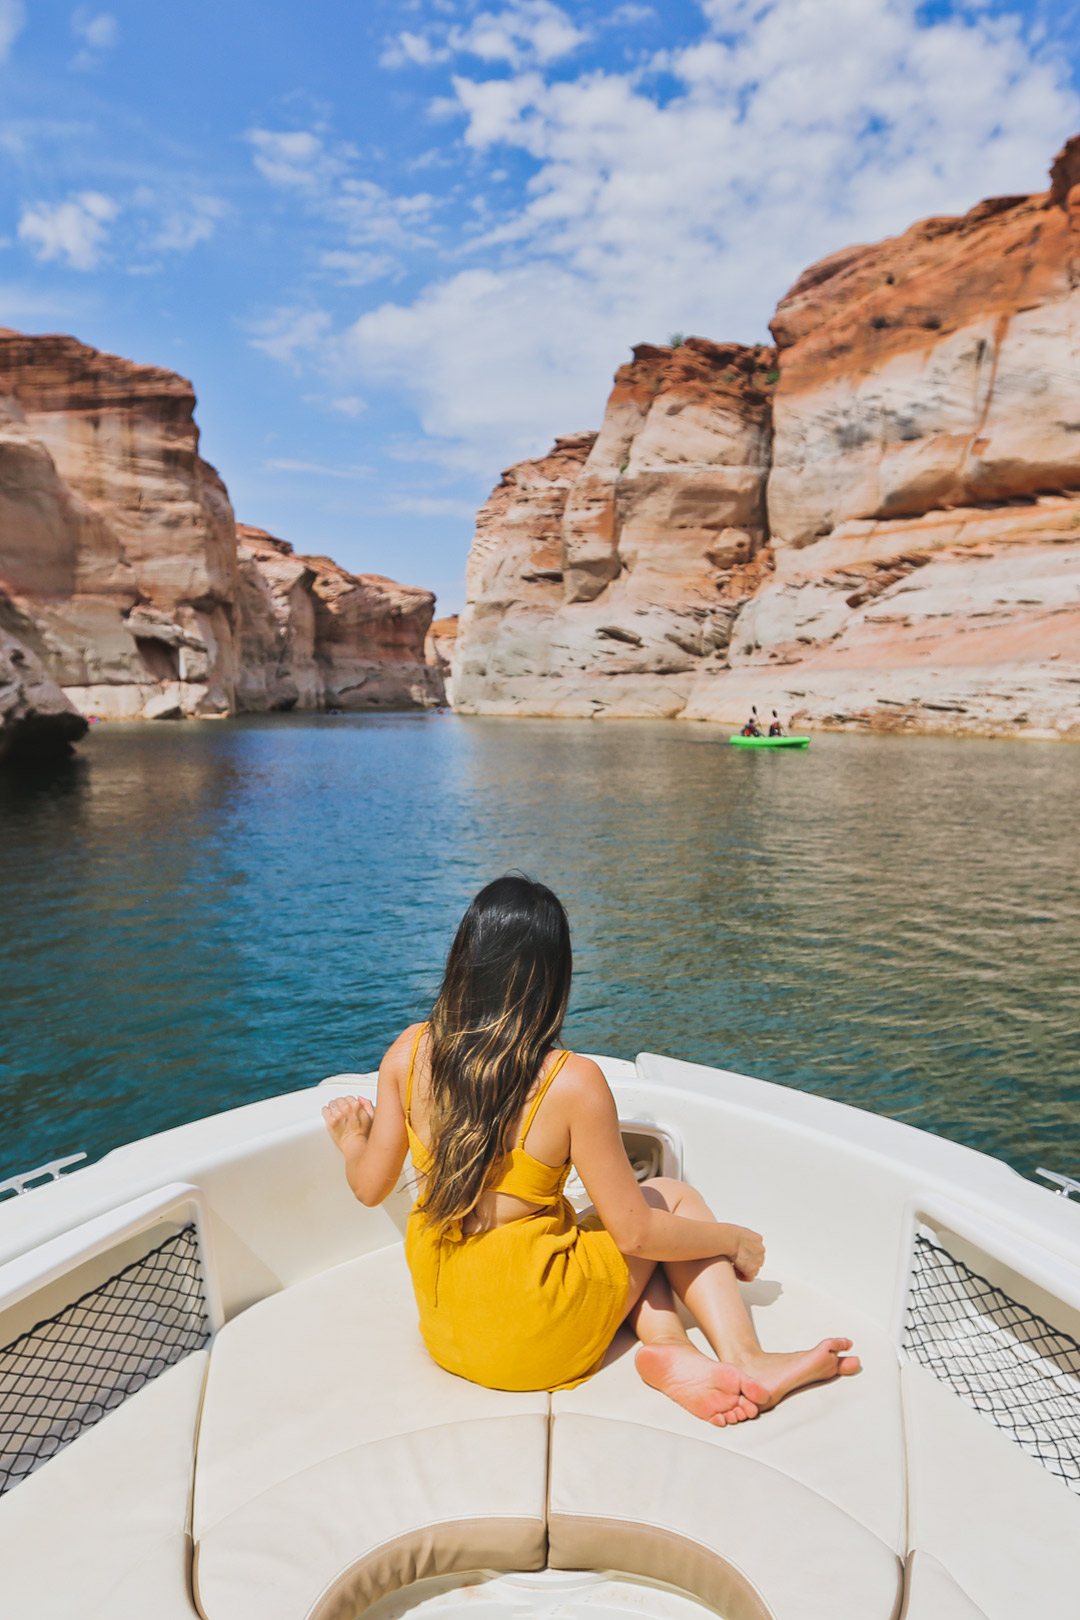 Lake Powell Boat Rentals + 11 Incredible Things to Do in Lake Powell and Glen Canyon National Recreation Area Arizona and Utah // Local Adventurer #usa #travel #arizona #utah #az #boating #traveltips #lakelife #lakes #glencanyon